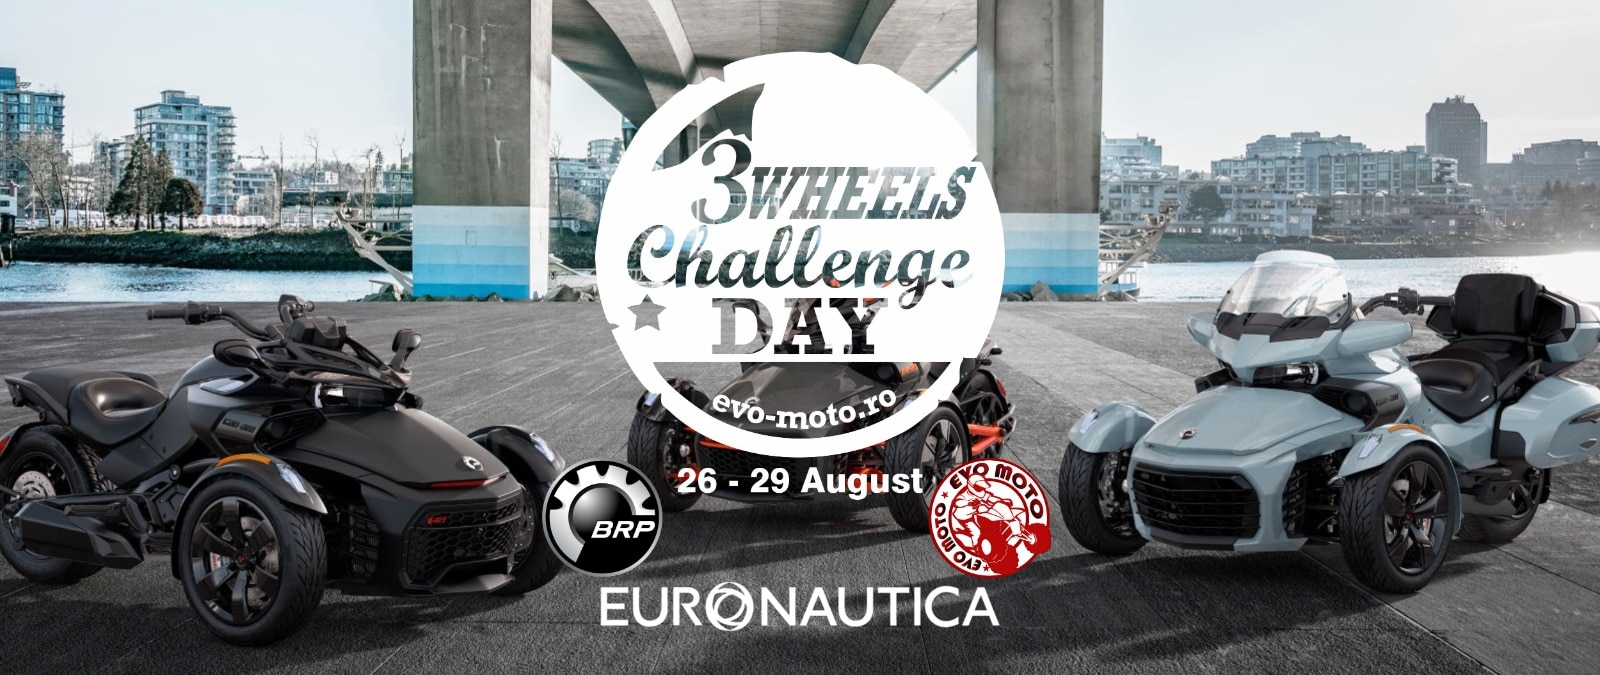 eveniment-3-wheels-challenge-day